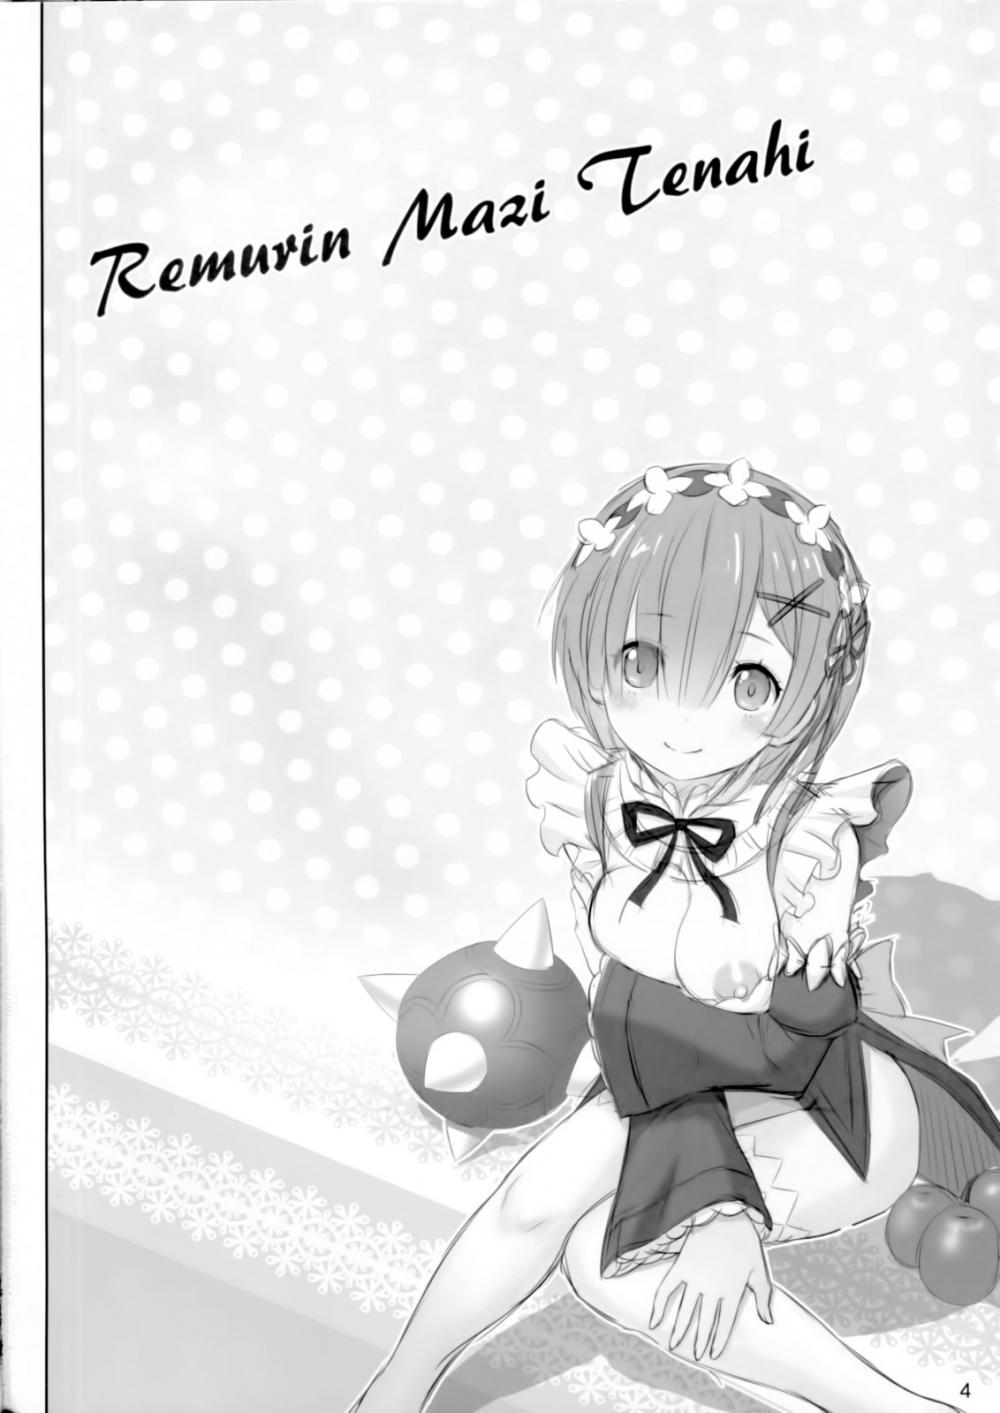 Hentai Manga Comic-Remurin Maji Tenshi-Read-3